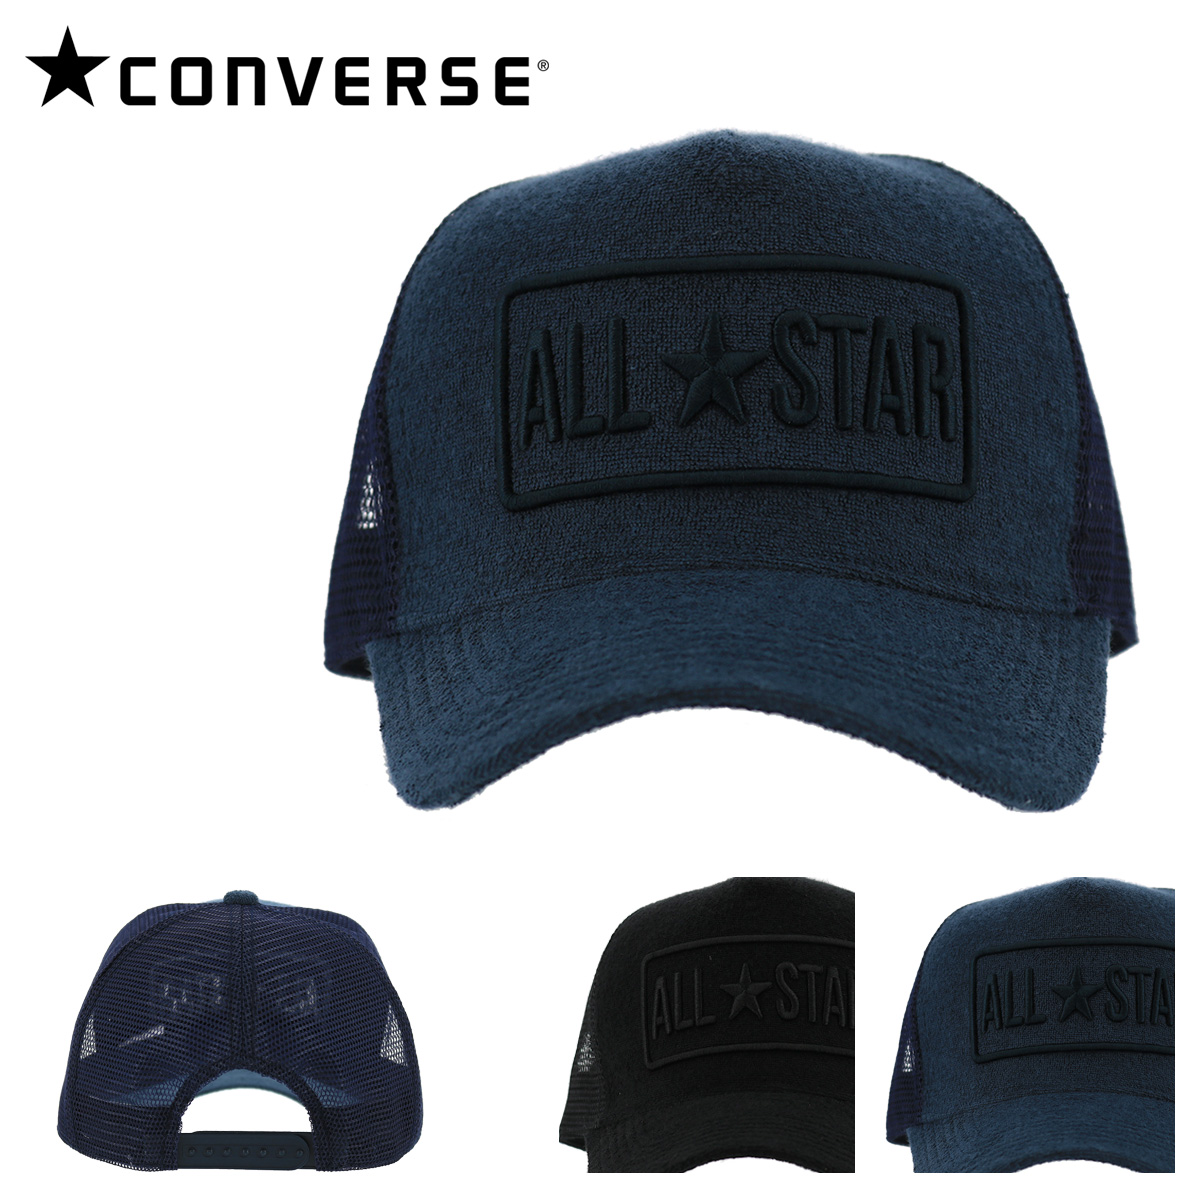 converse trucker hat